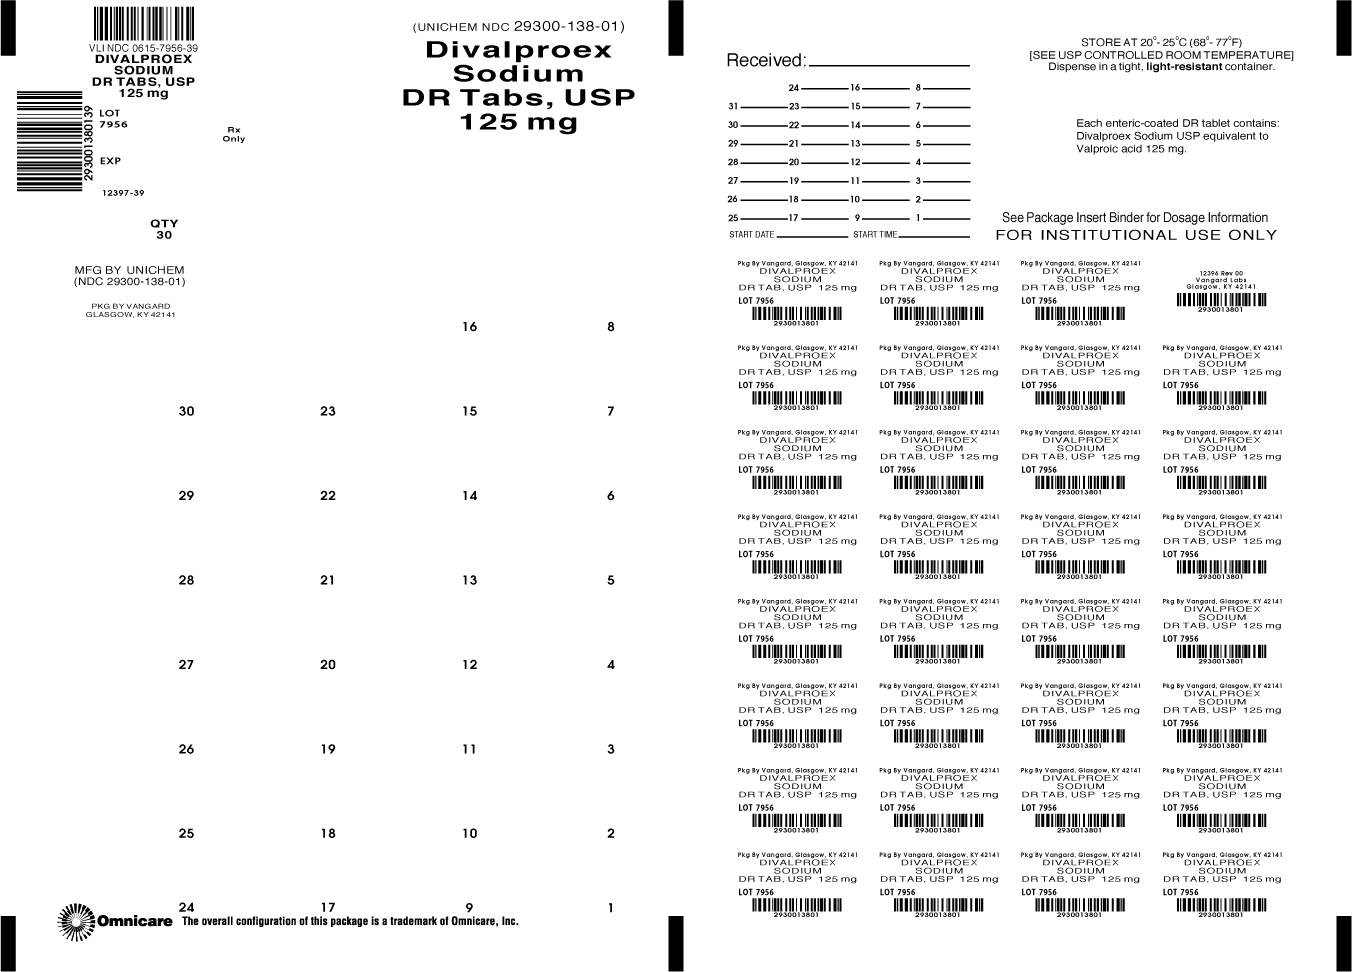 Divalproex Sodium DR Tabs 125mg bingo card label